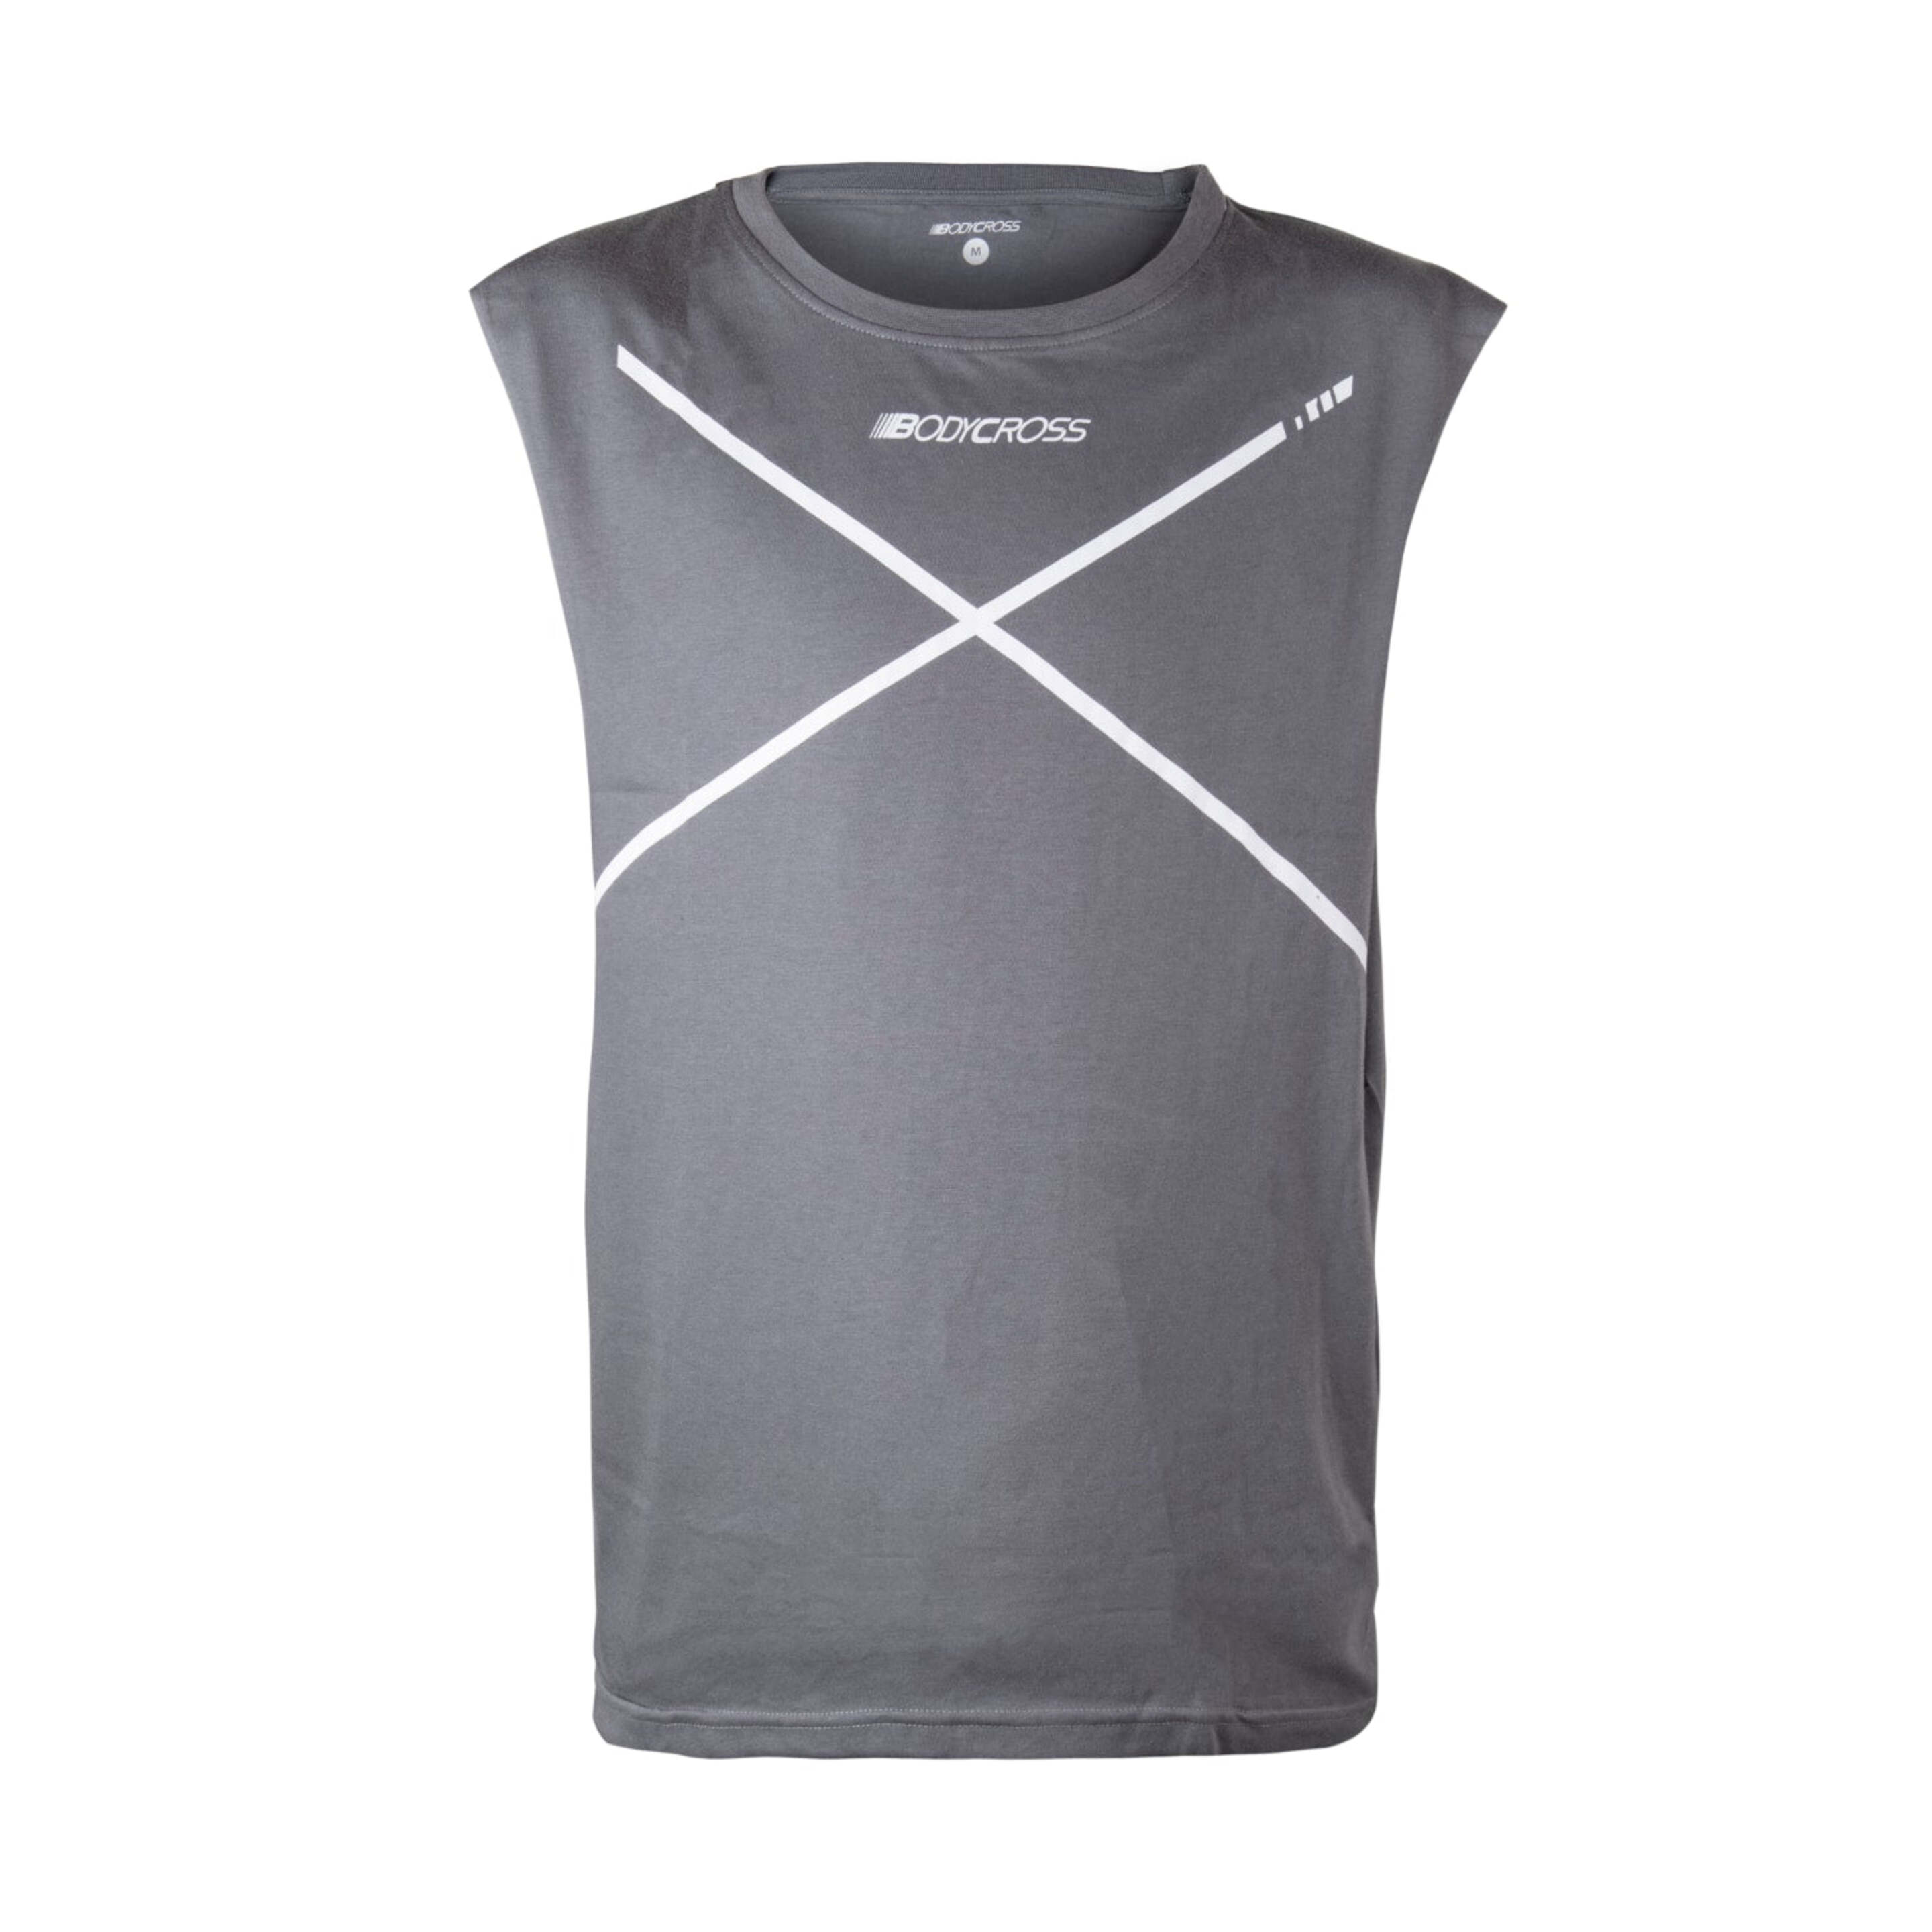 Camiseta Deportiva Bodycross Bryton - Gris - Bryton-grey/white-l  MKP